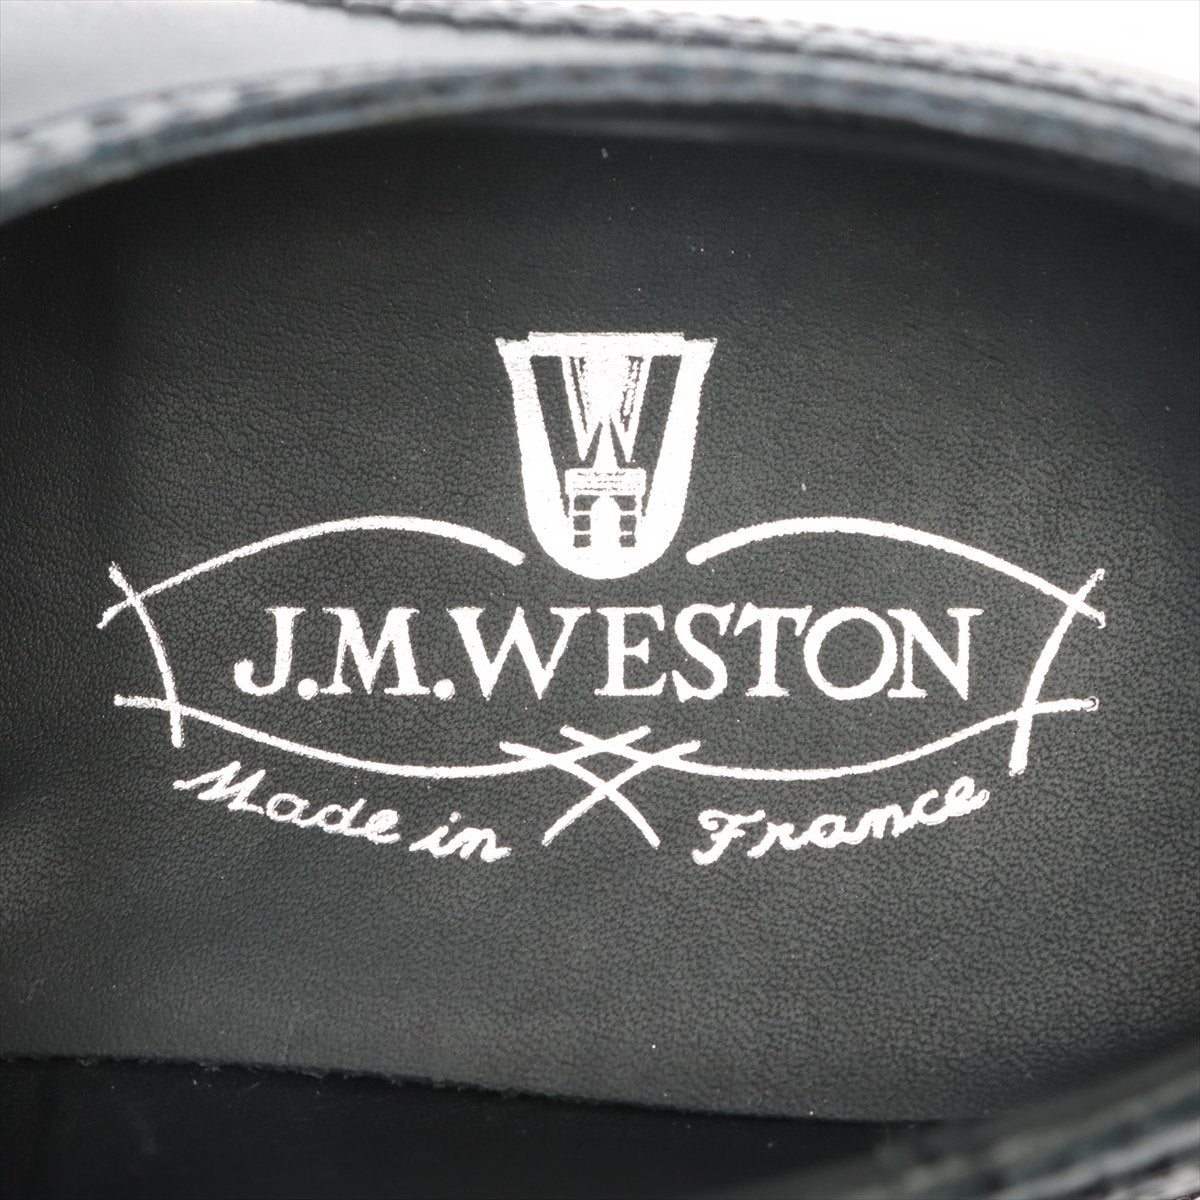 James Waiston Leather Shoes 6  Navy